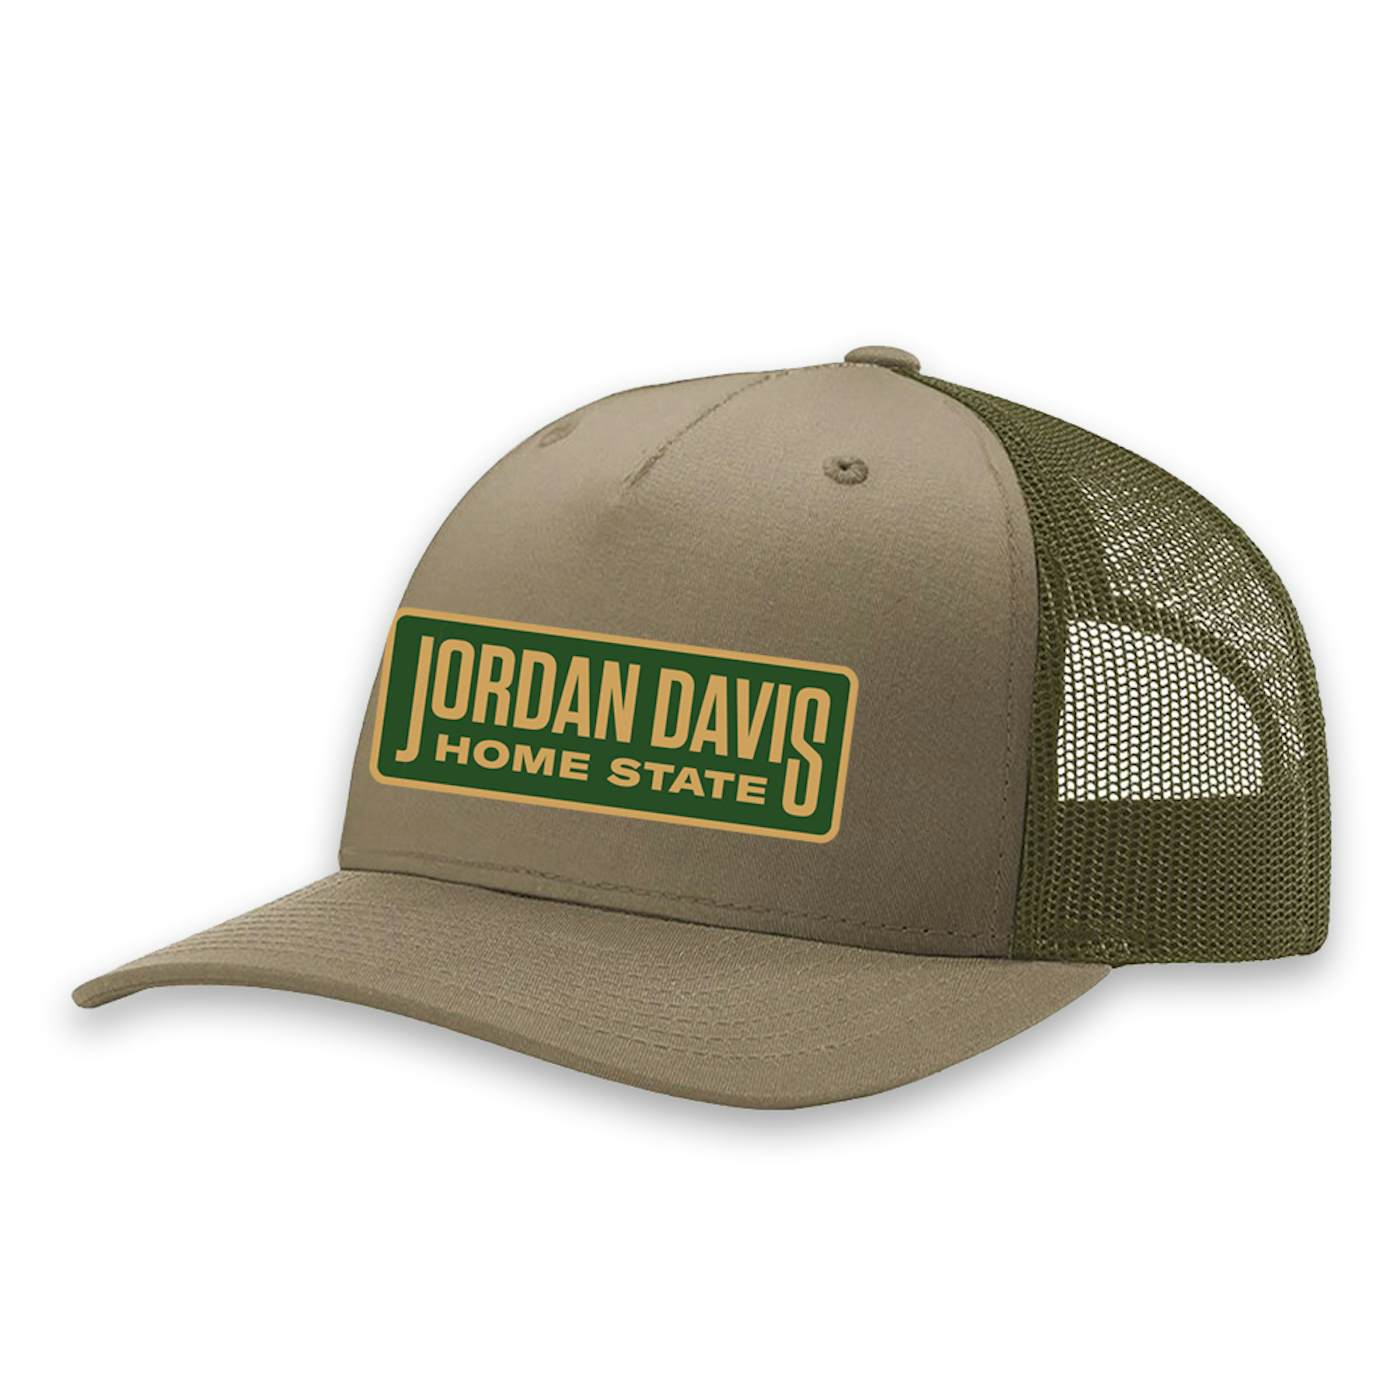 Jordan Davis Home State Patch Hat